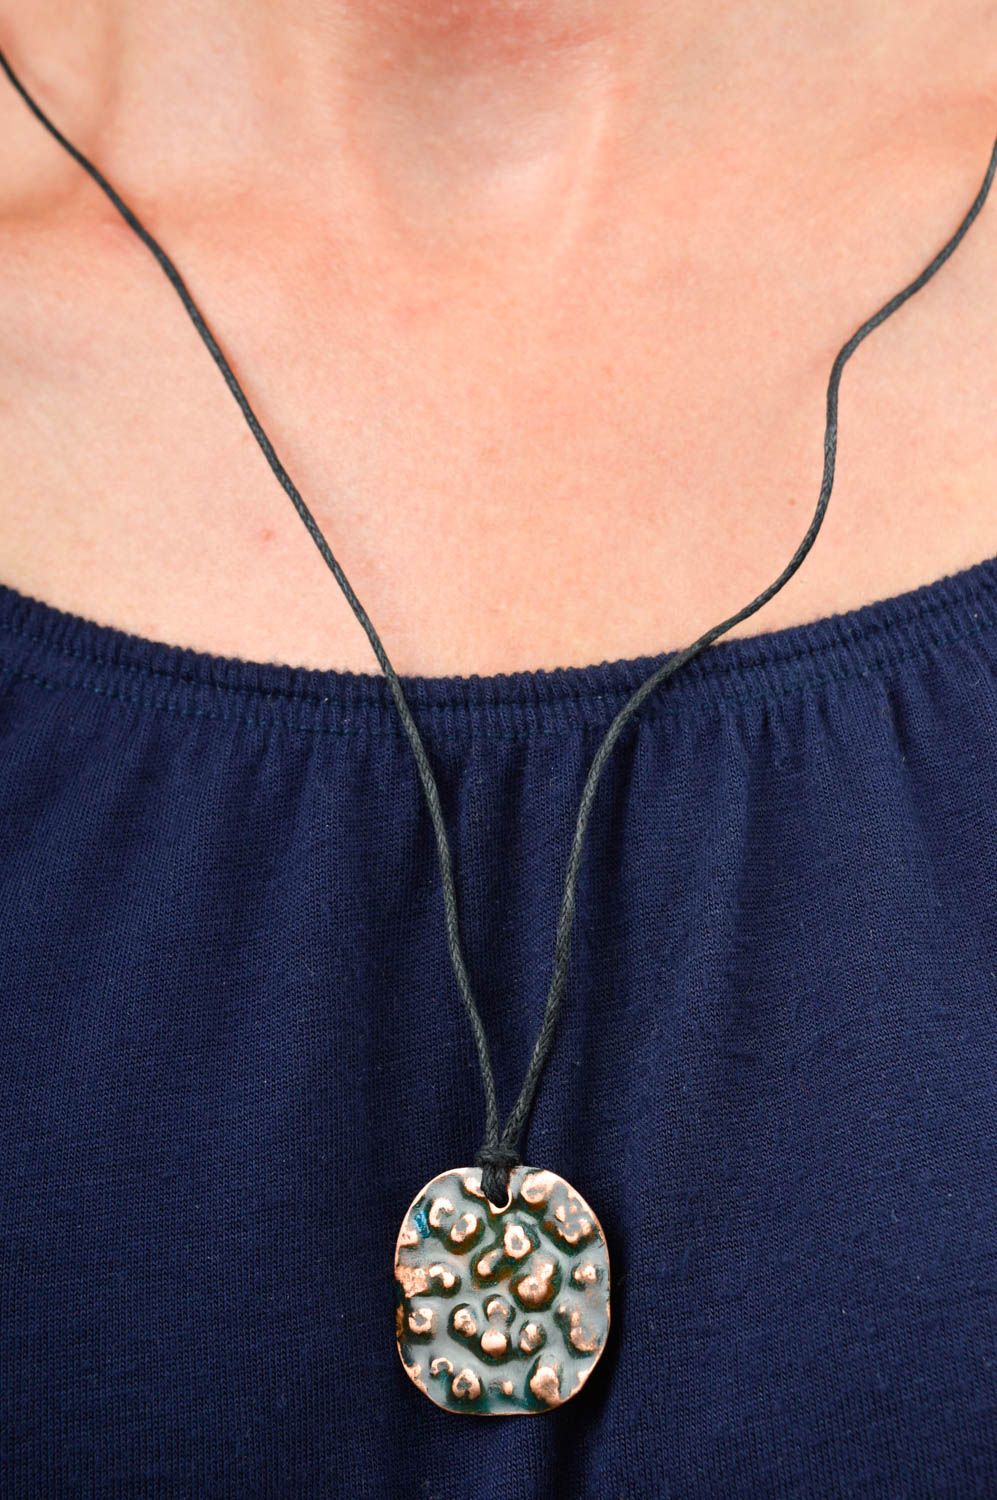 Stylish handmade copper pendant fashion trends metal neck accessories ideas photo 1